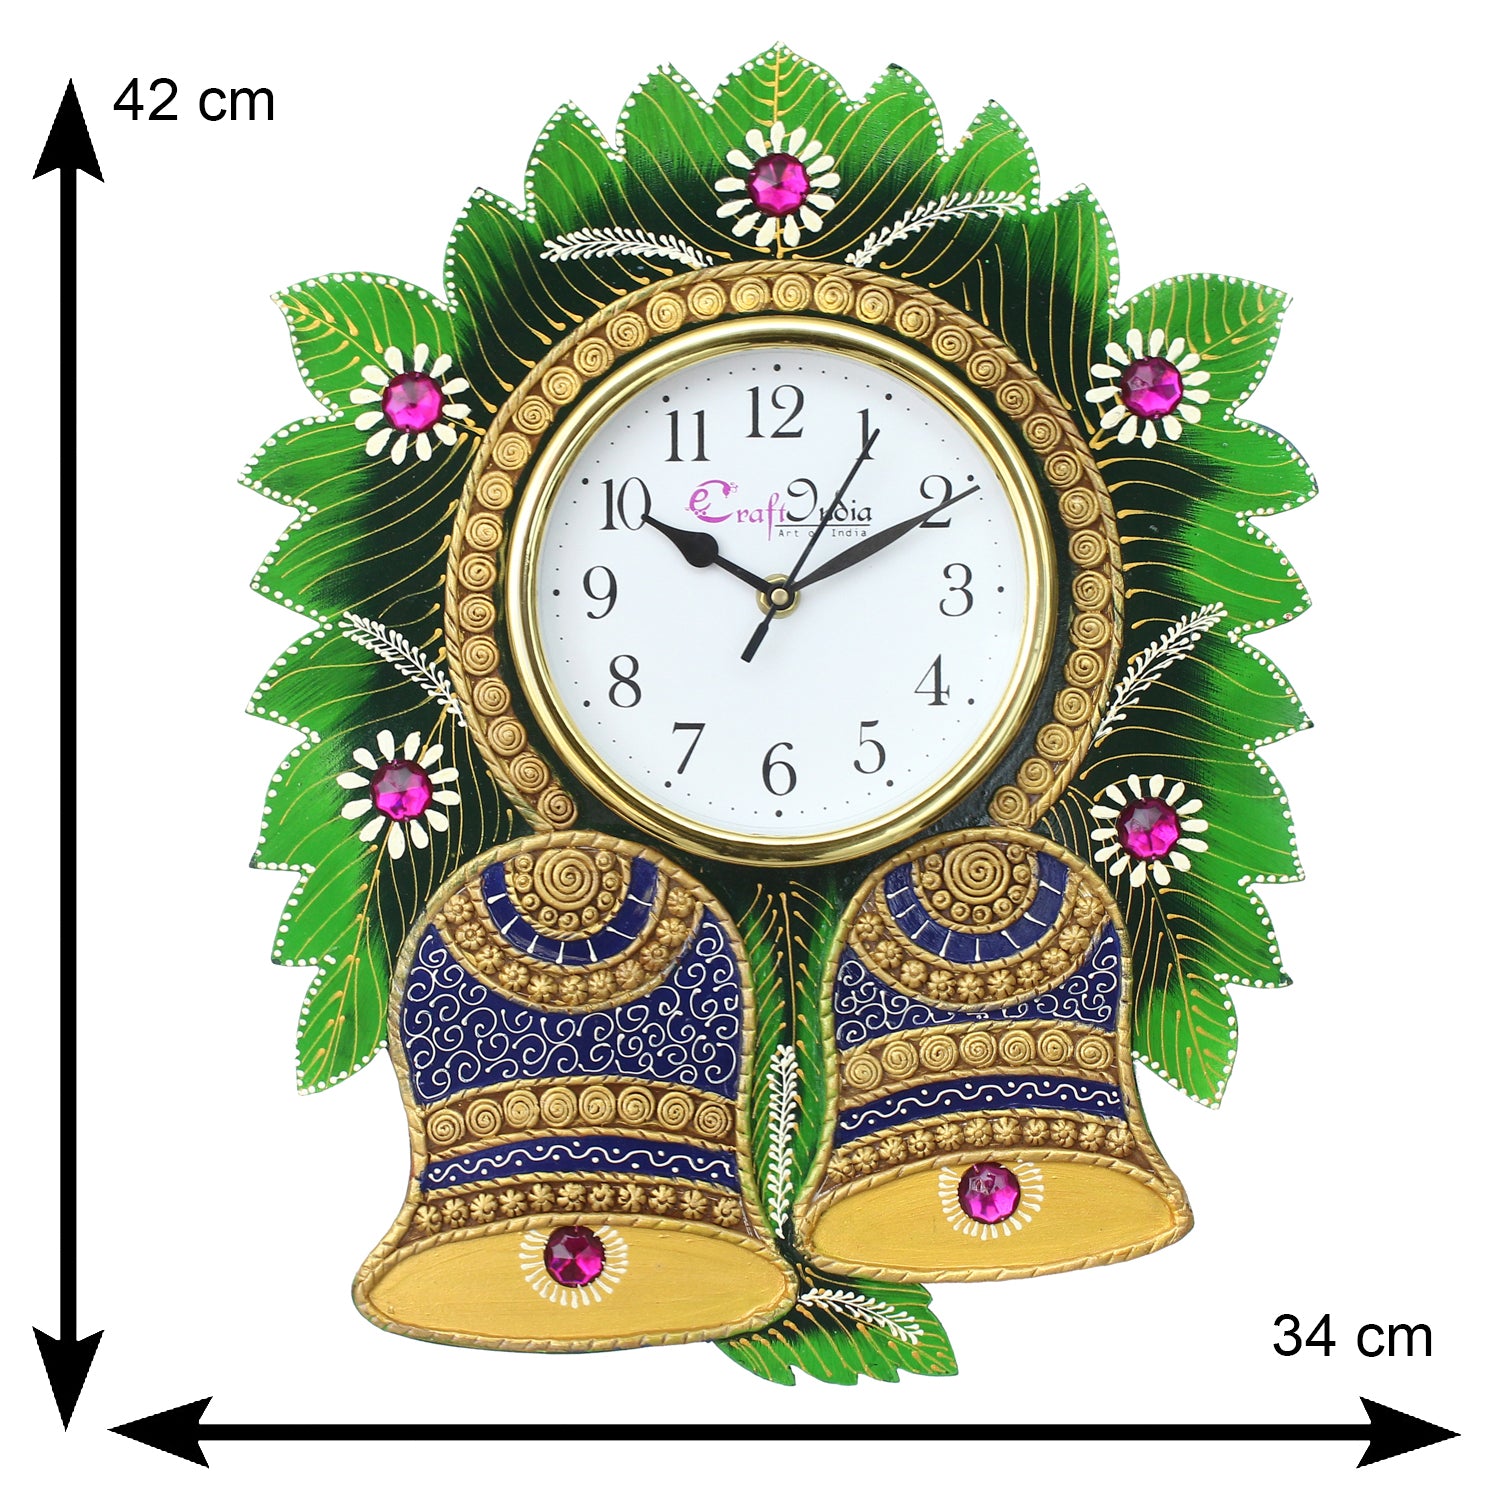 Floral Bell Design Handicrafted Paper Mache Wooden Wall Clock 2